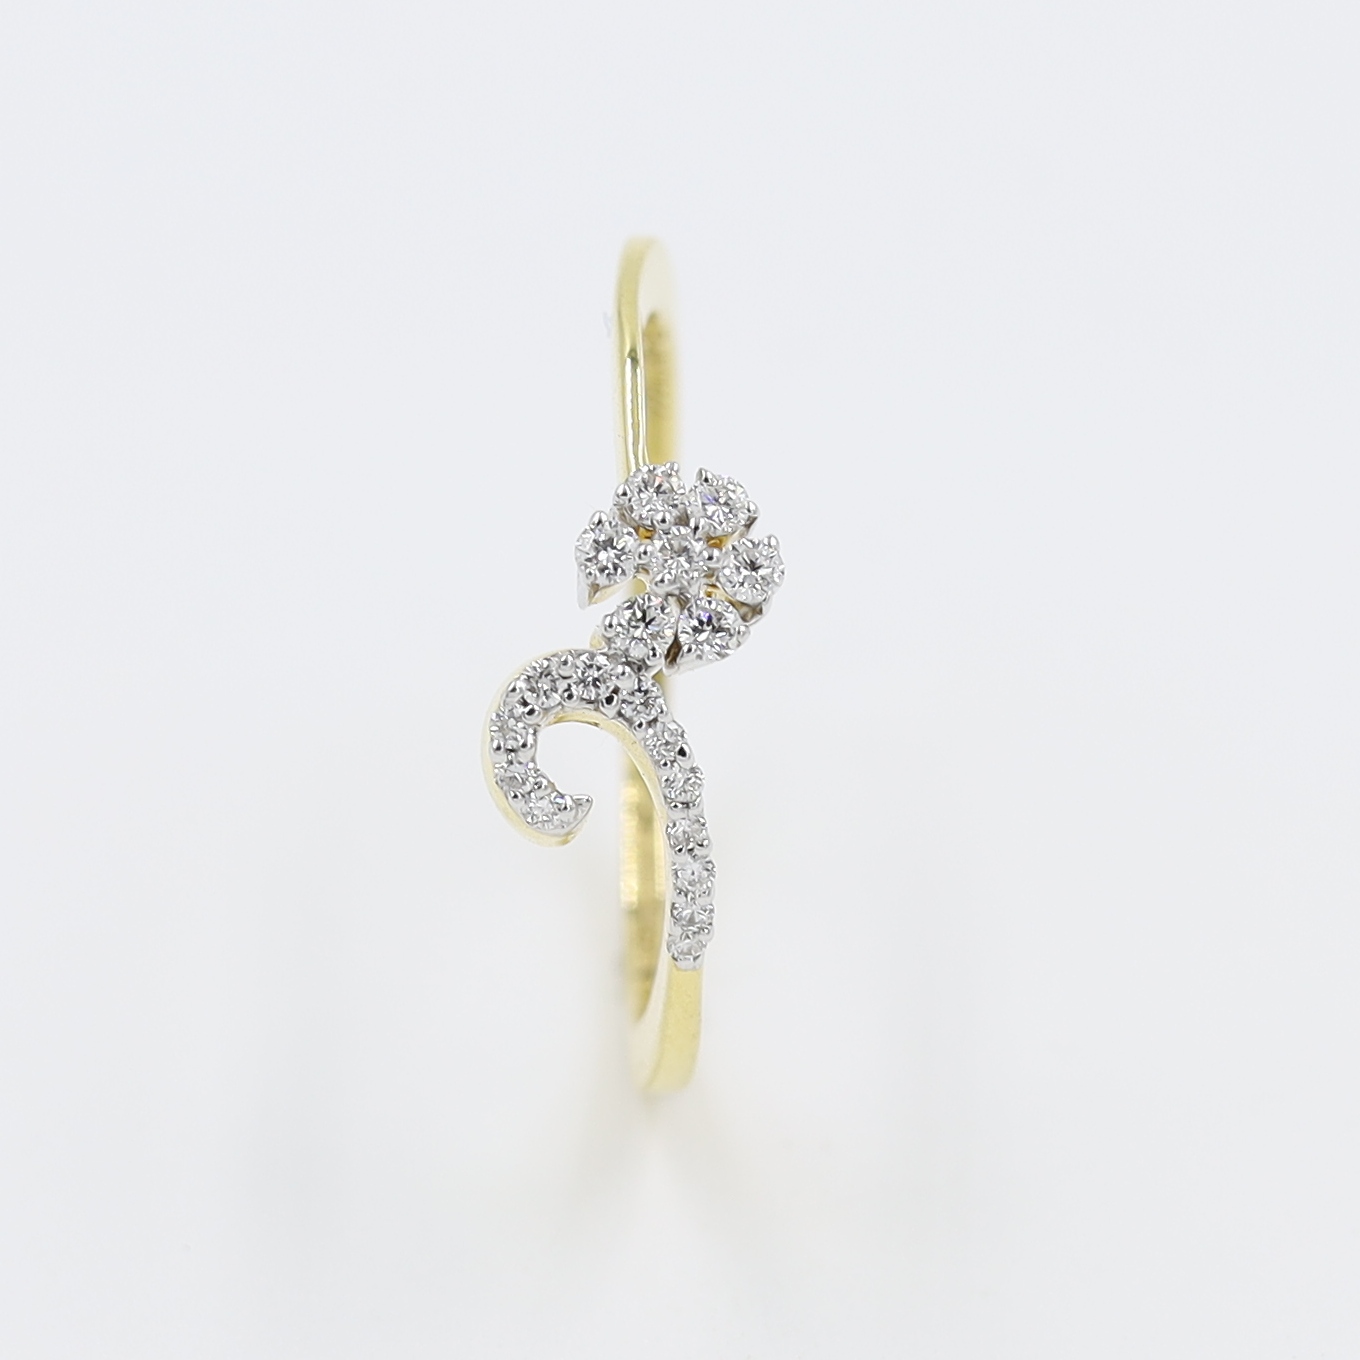 Floral Dazzling 14 Karat Gold And Diamond Finger Ring